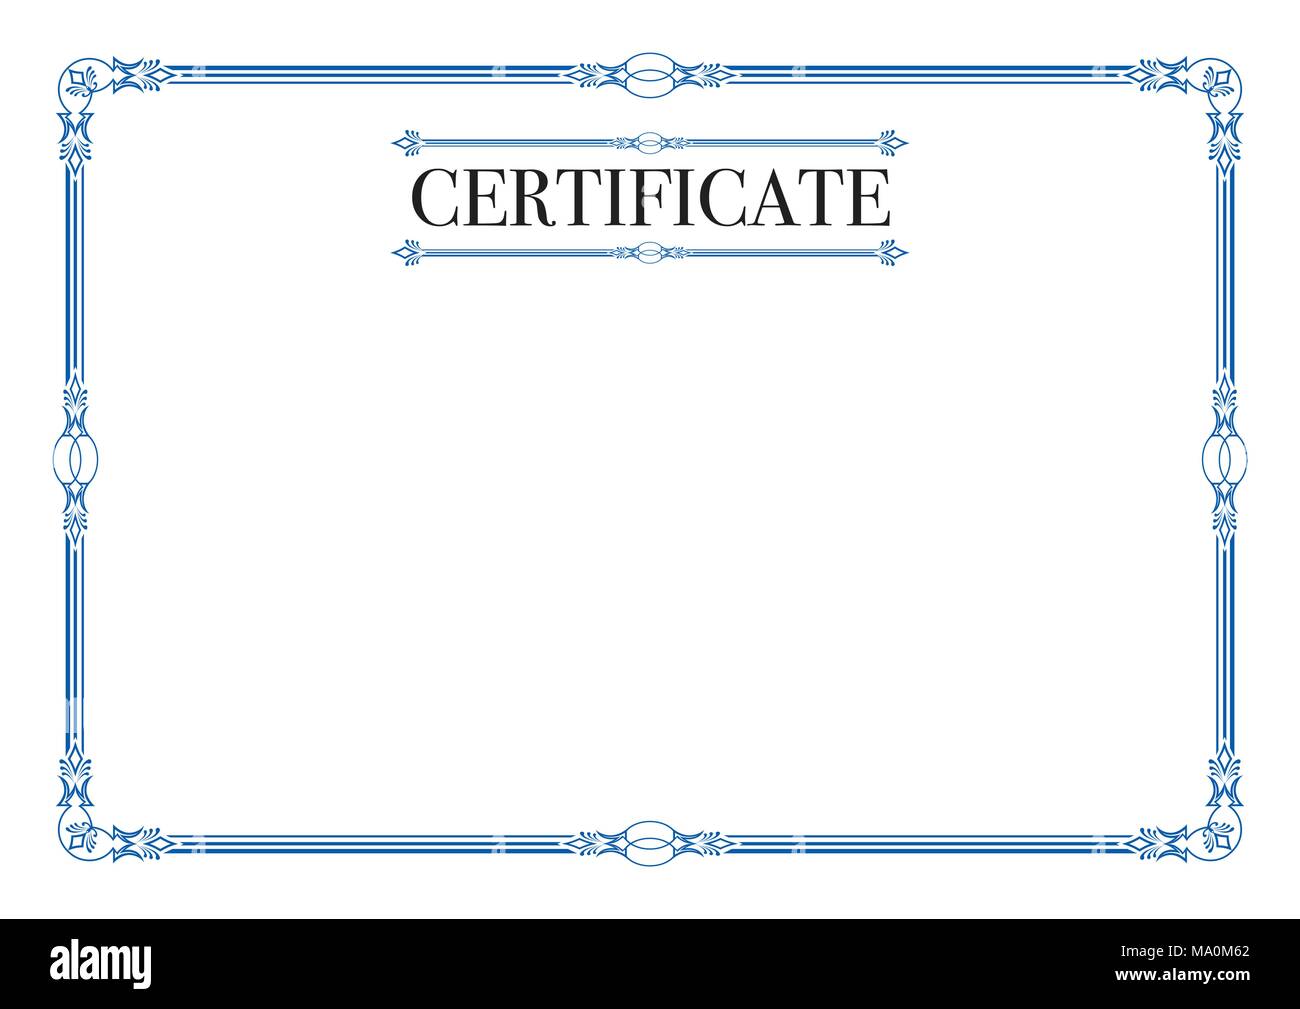 Certificate Border Ausgeschnittene Stockfotos und -bilder - Alamy Intended For Free Printable Certificate Border Templates